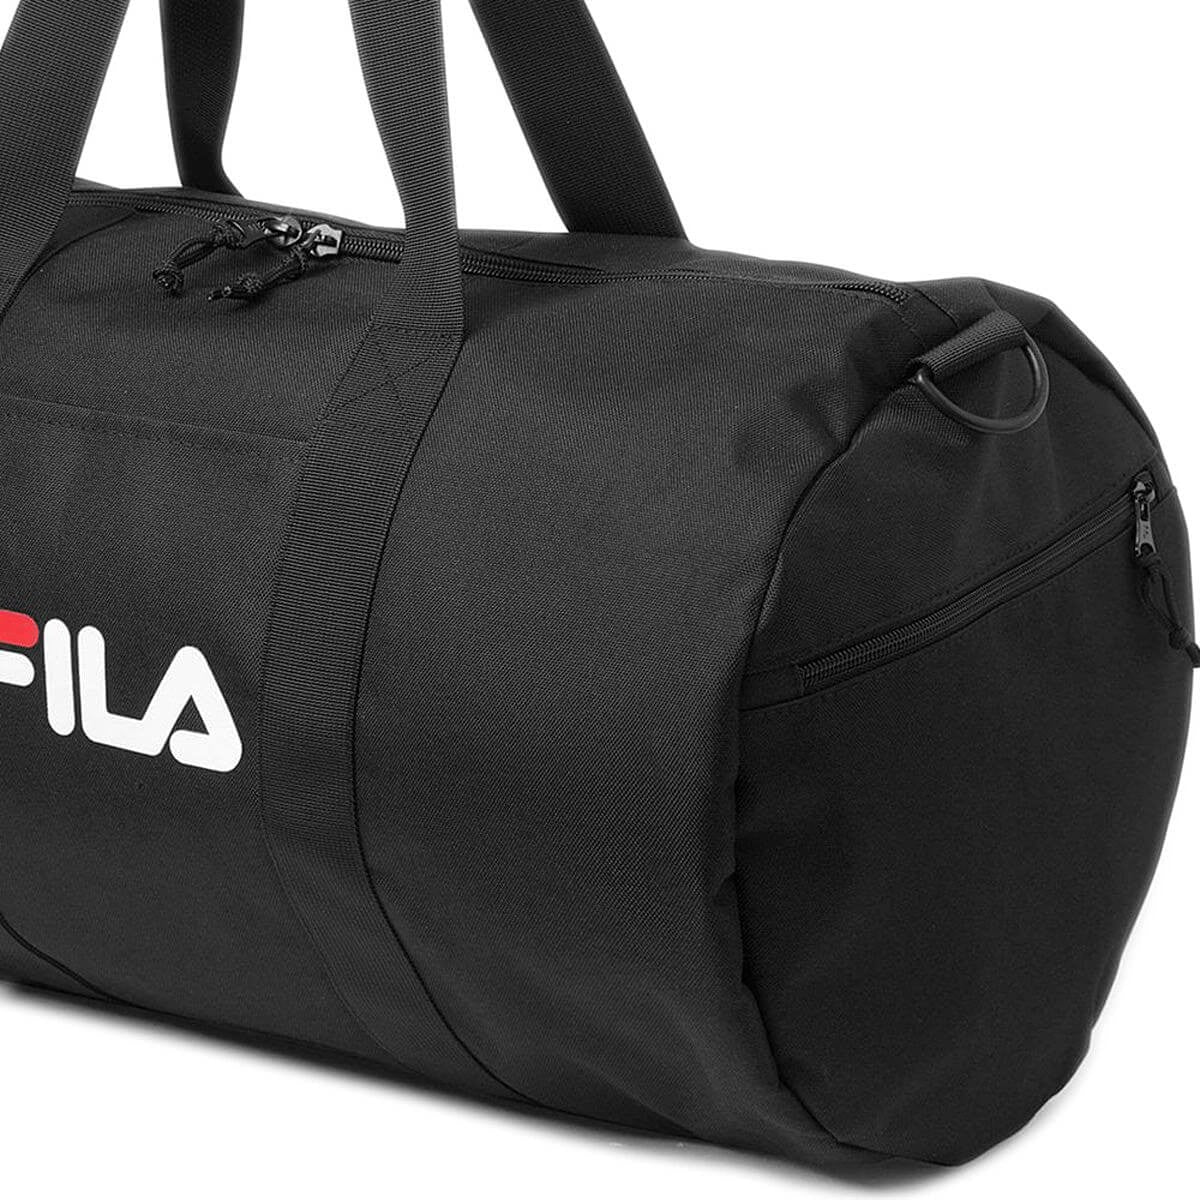 Fila Fuxin Gymbag With Big Logo Black